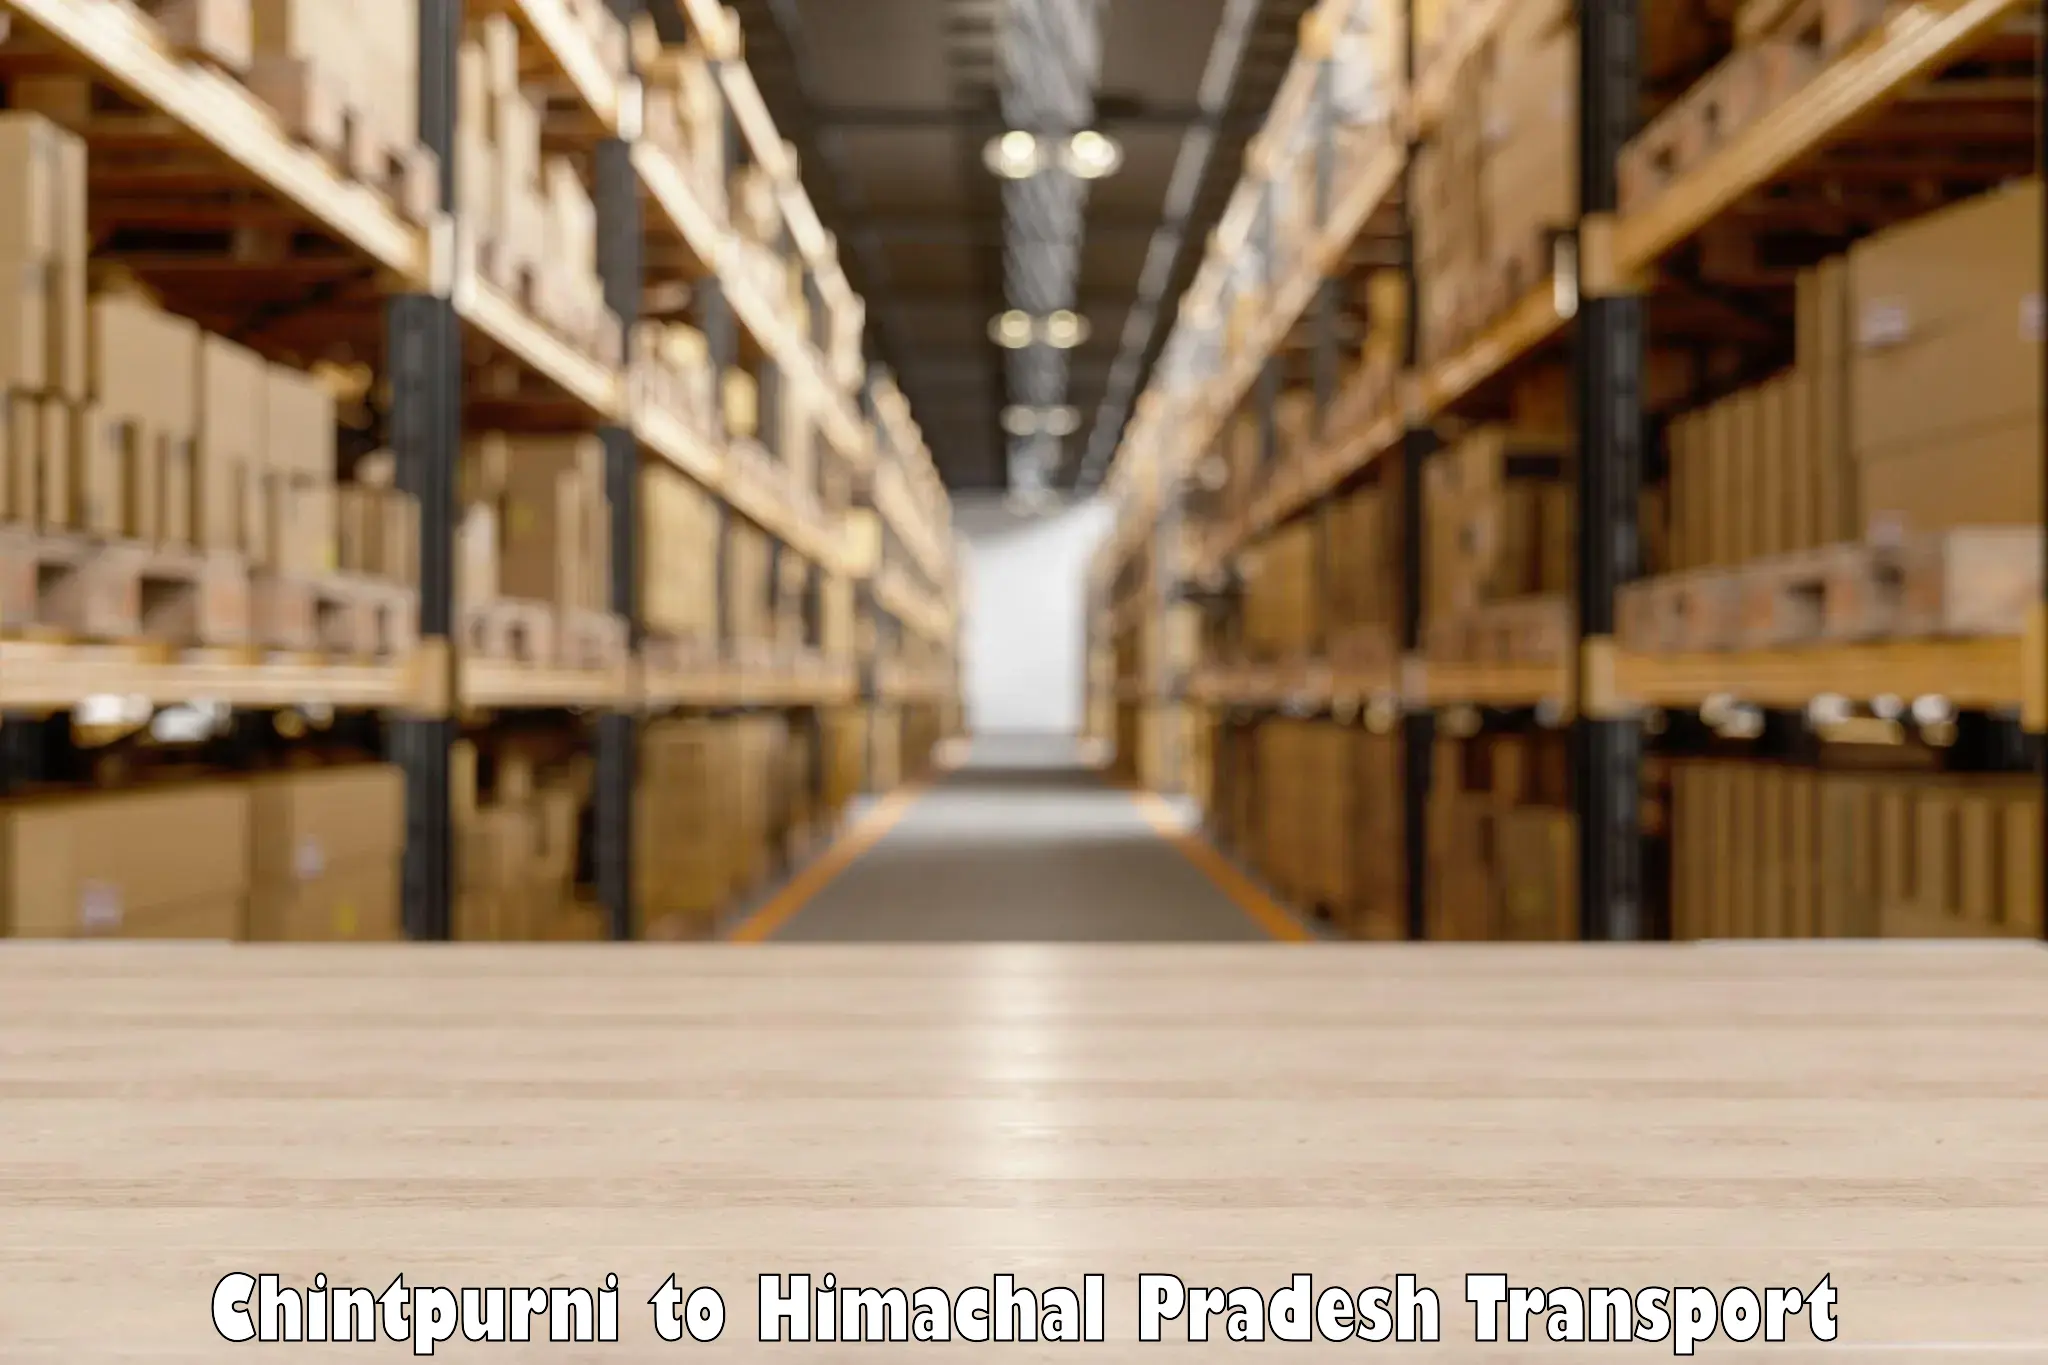 Truck transport companies in India Chintpurni to Jukhala